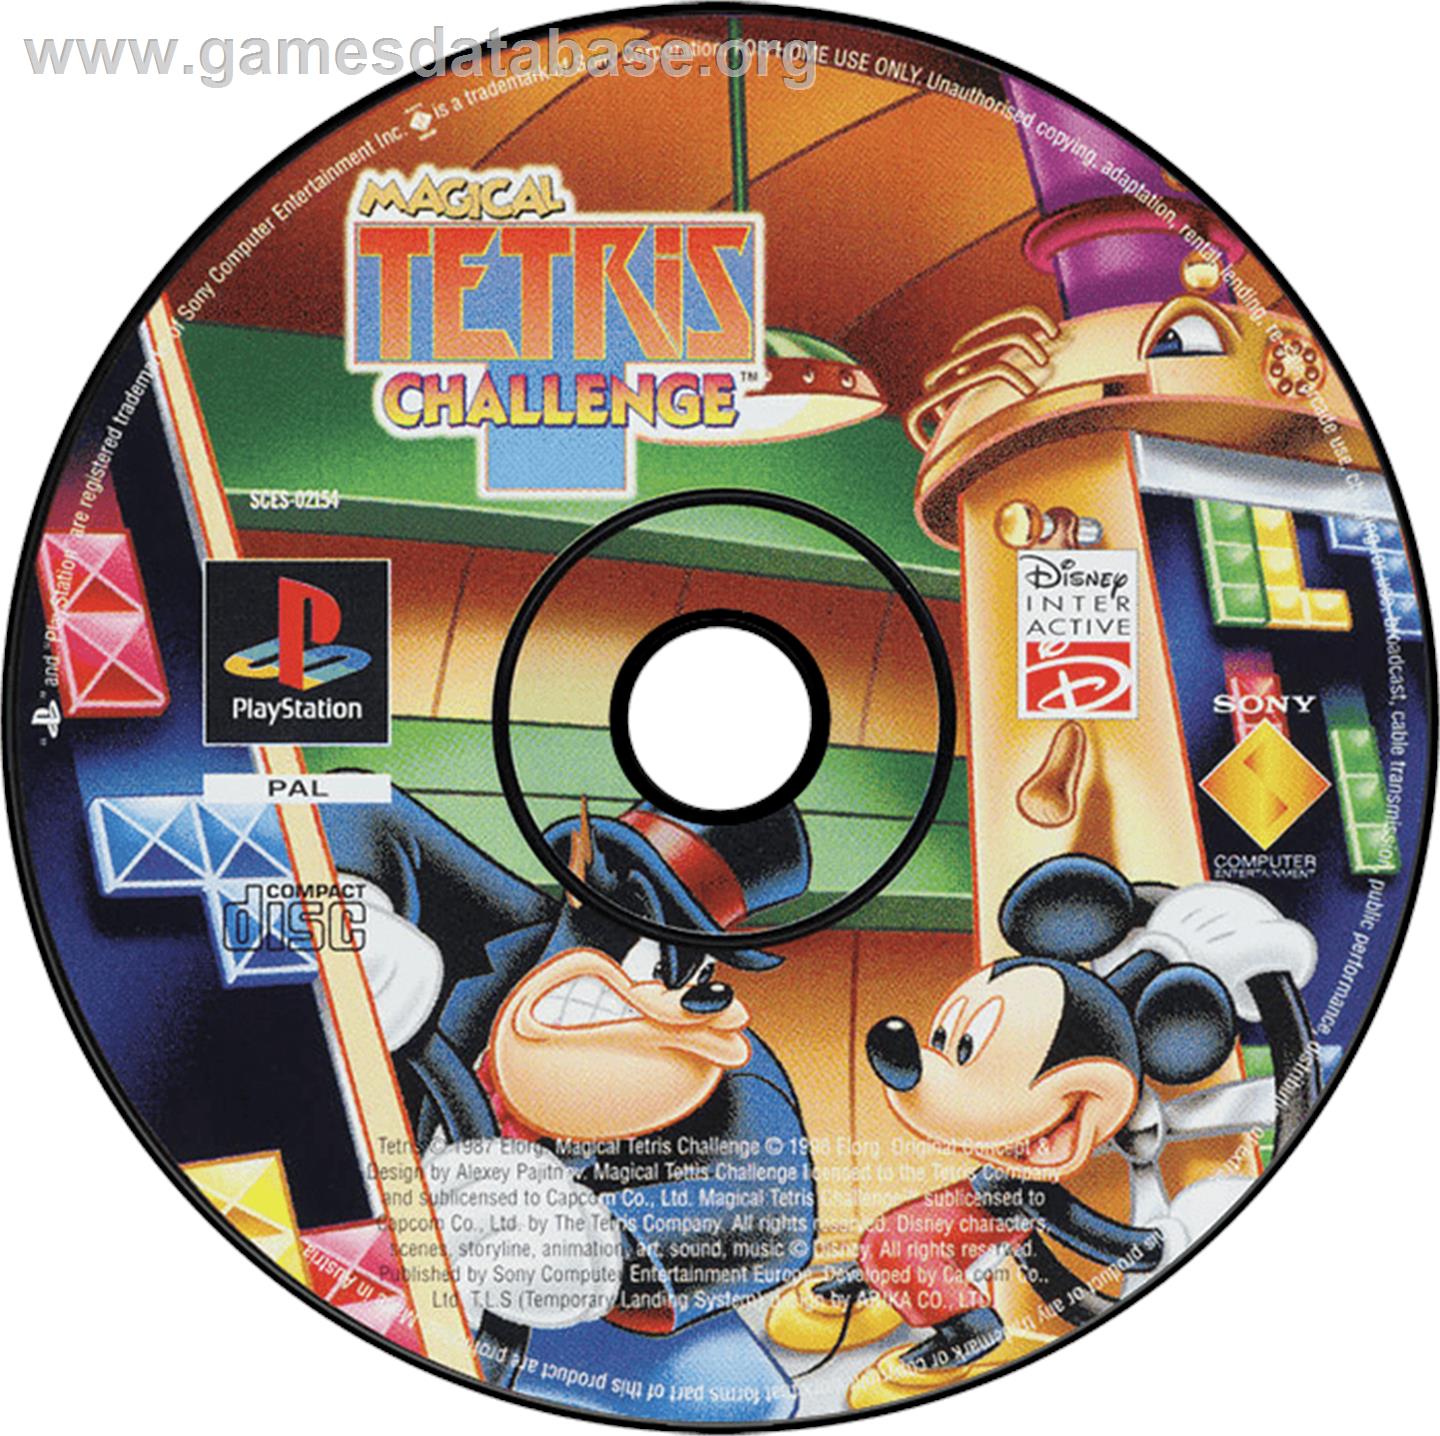 Magical Tetris Challenge - Sony Playstation - Artwork - Disc